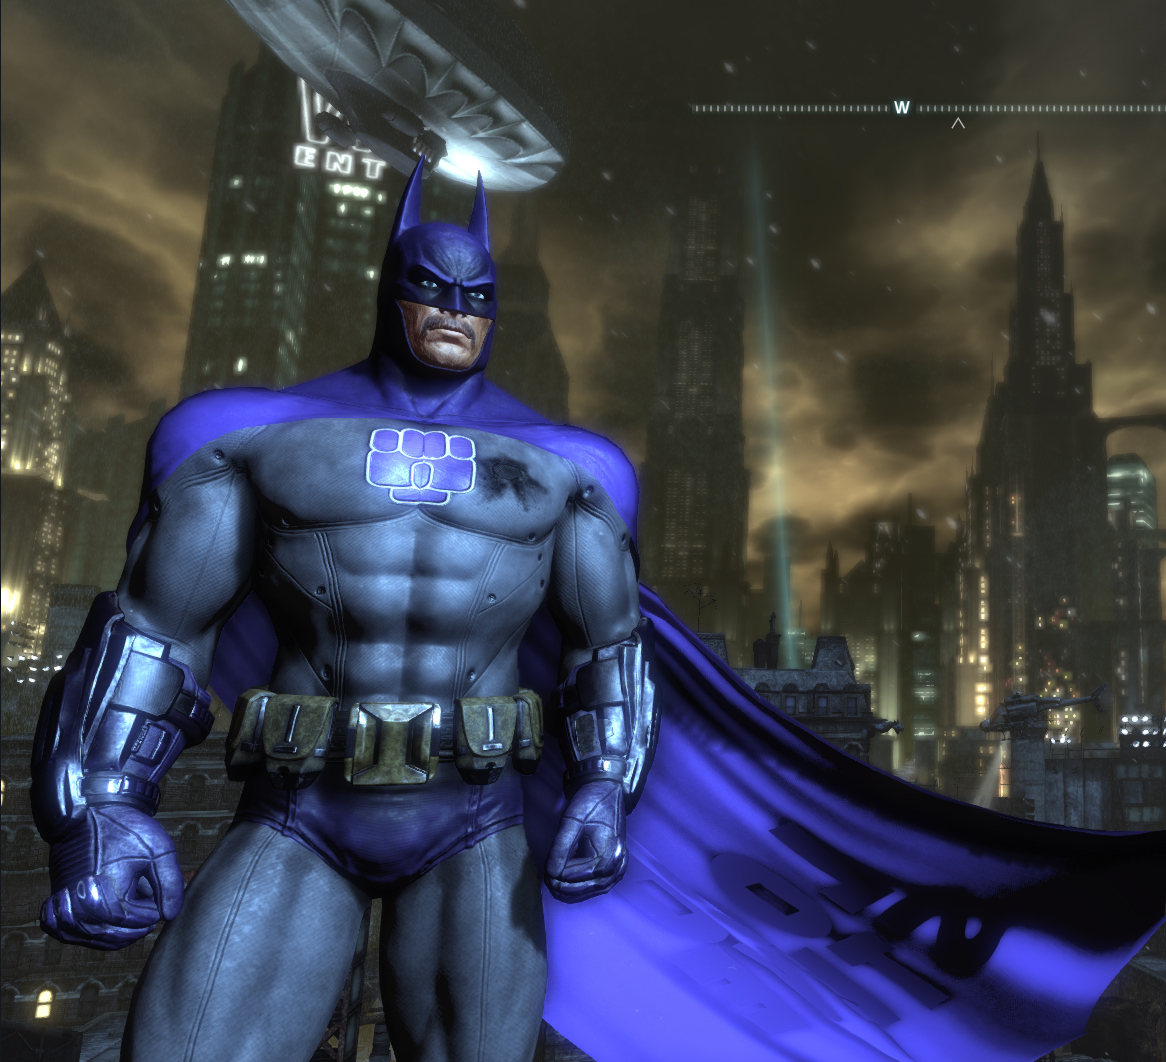 Batman Arkham City Mods - Batman Arkham Knight Mod Adds More Playable ...